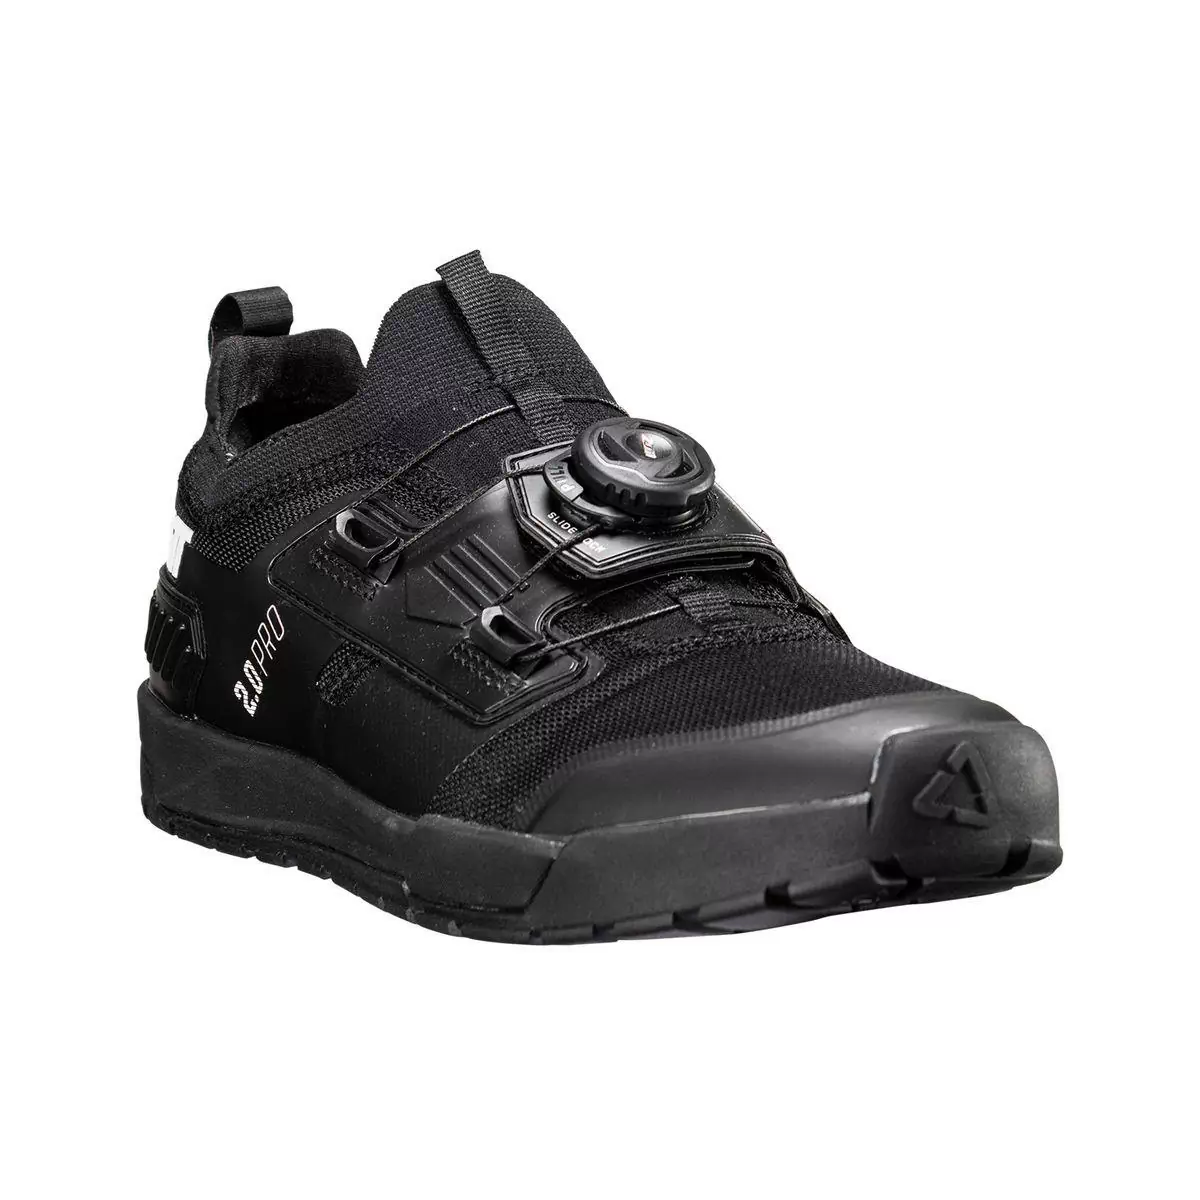 Chaussures VTT Pro Flat 2.0 noir taille 38,5 - image